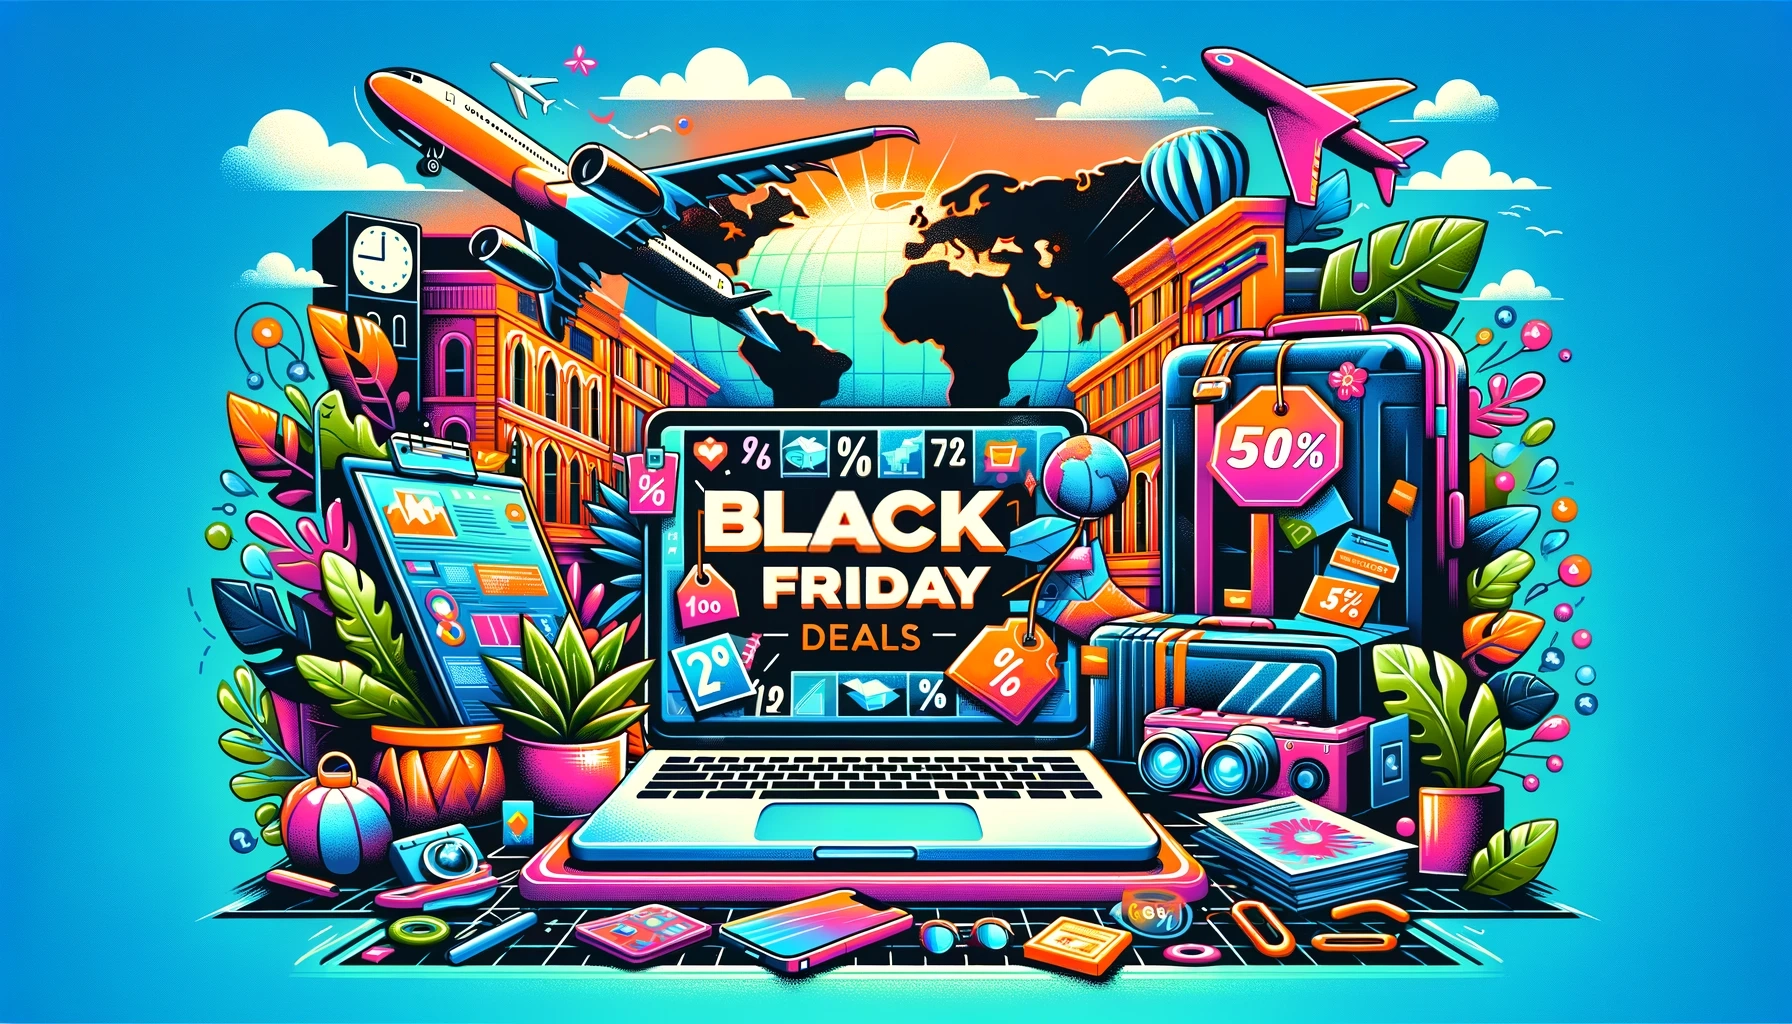 Black Friday deals decorative image